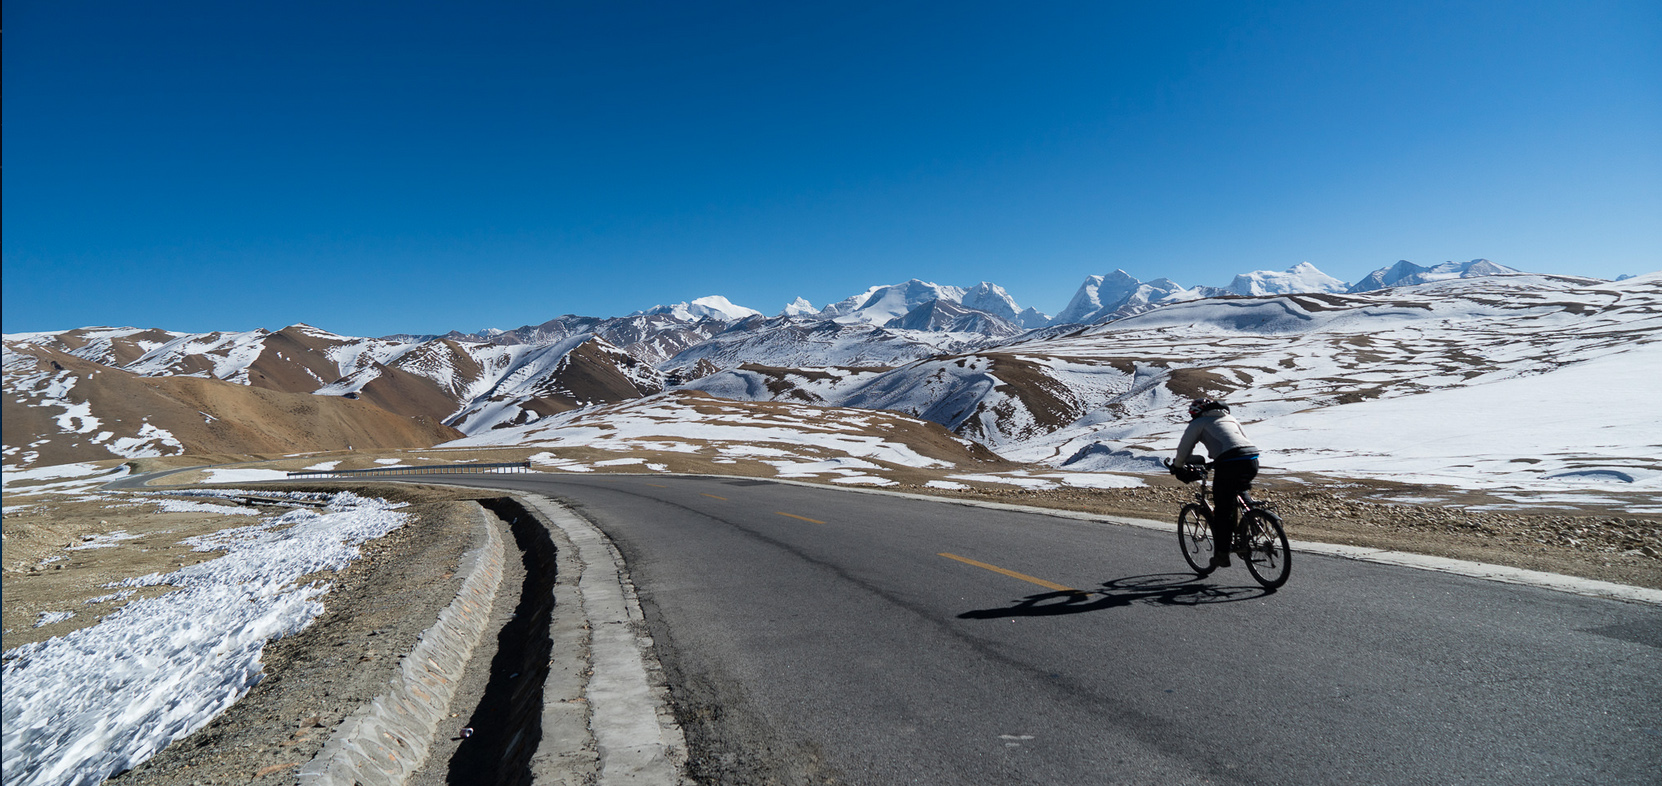 Road between China and Tibet. (Photo: David Kroodsma)